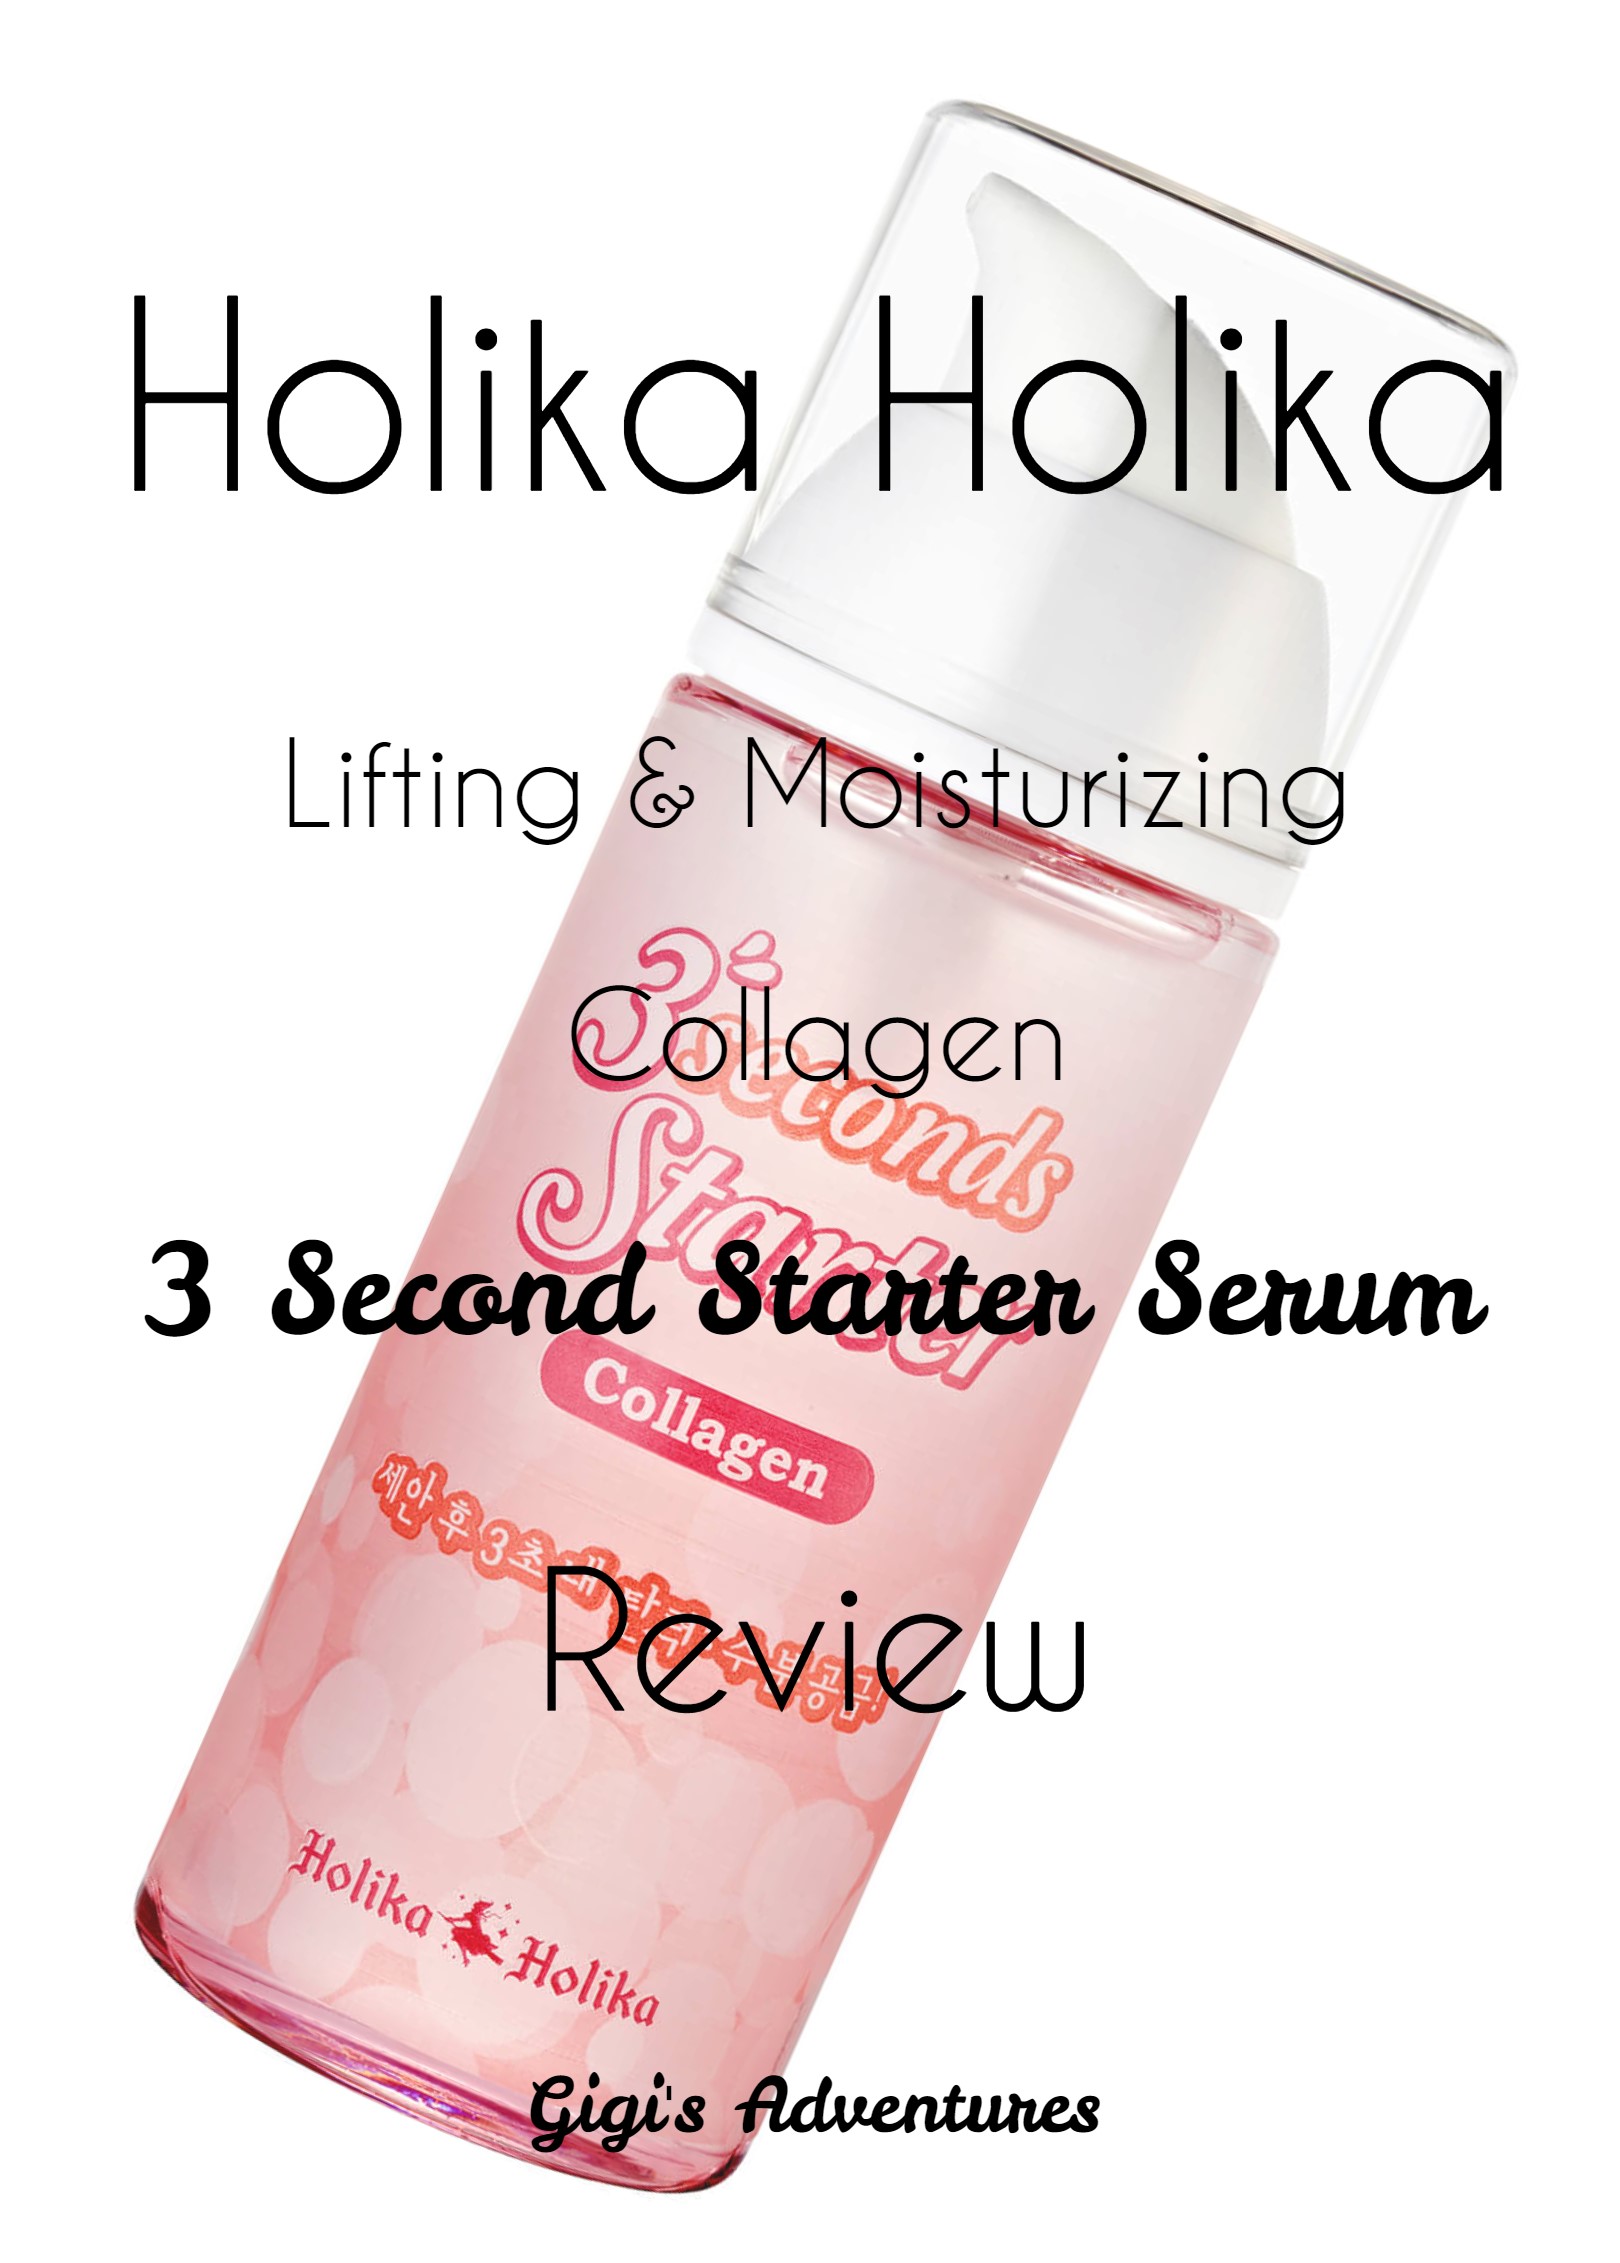 Holika Holika Lifting & Moisturizing Collagen 3 Second Starter Serum Review